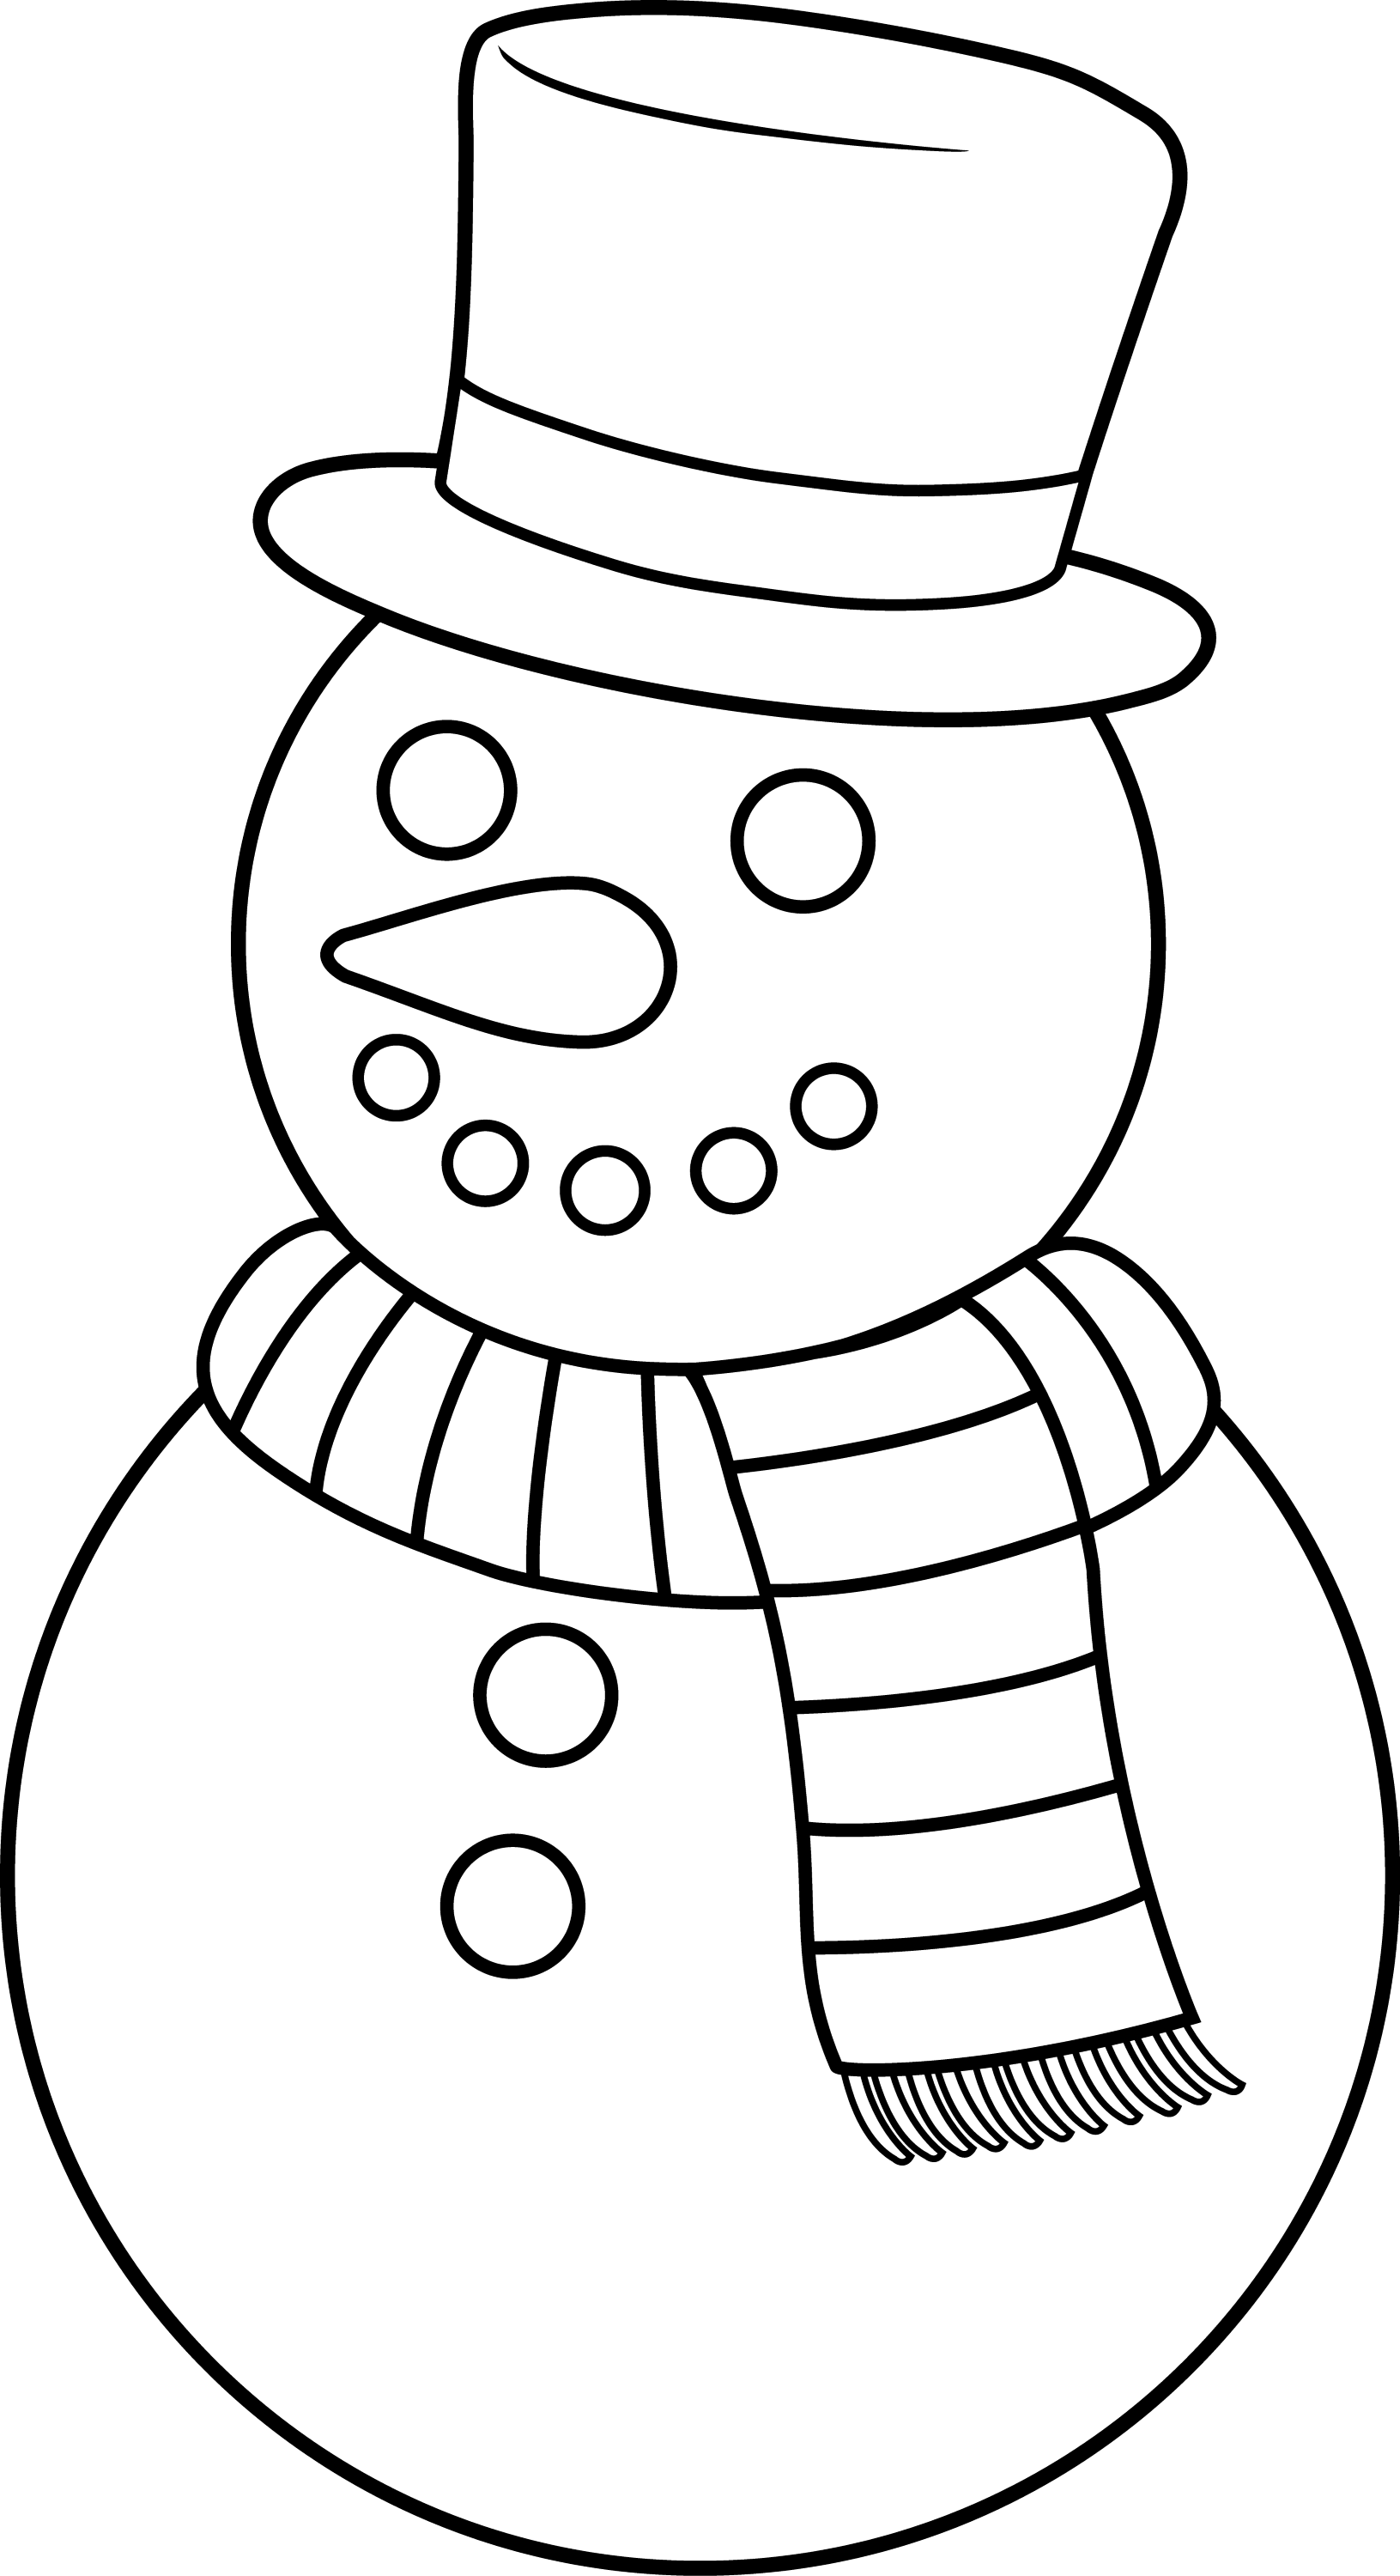 Download Colorable Christmas Snowman - Free Clip Art